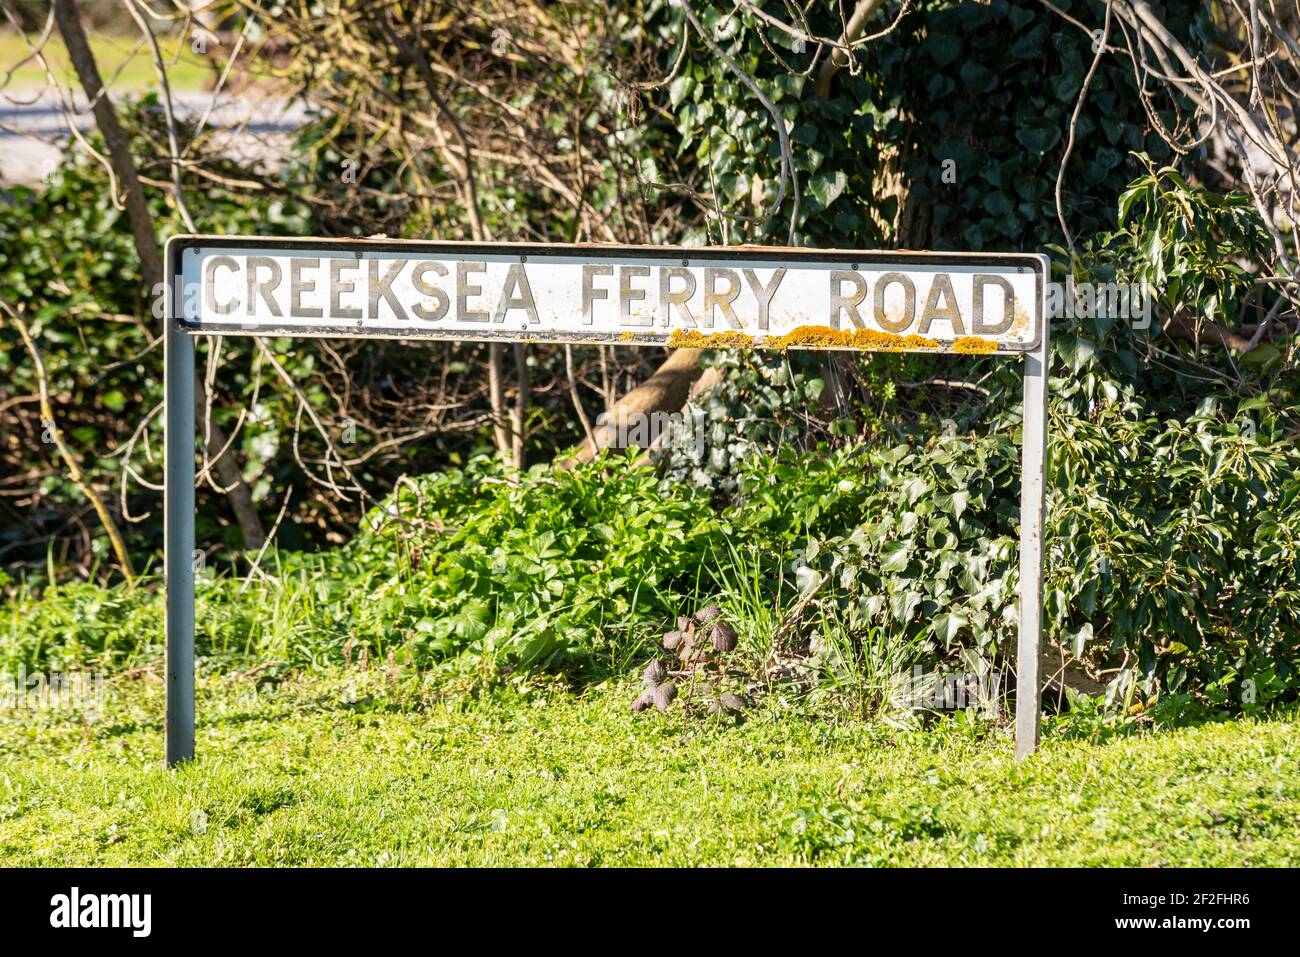 Creeksea Ferry Road street sign in Ballards Gore, Stambridge, Essex, UK Stock Photo